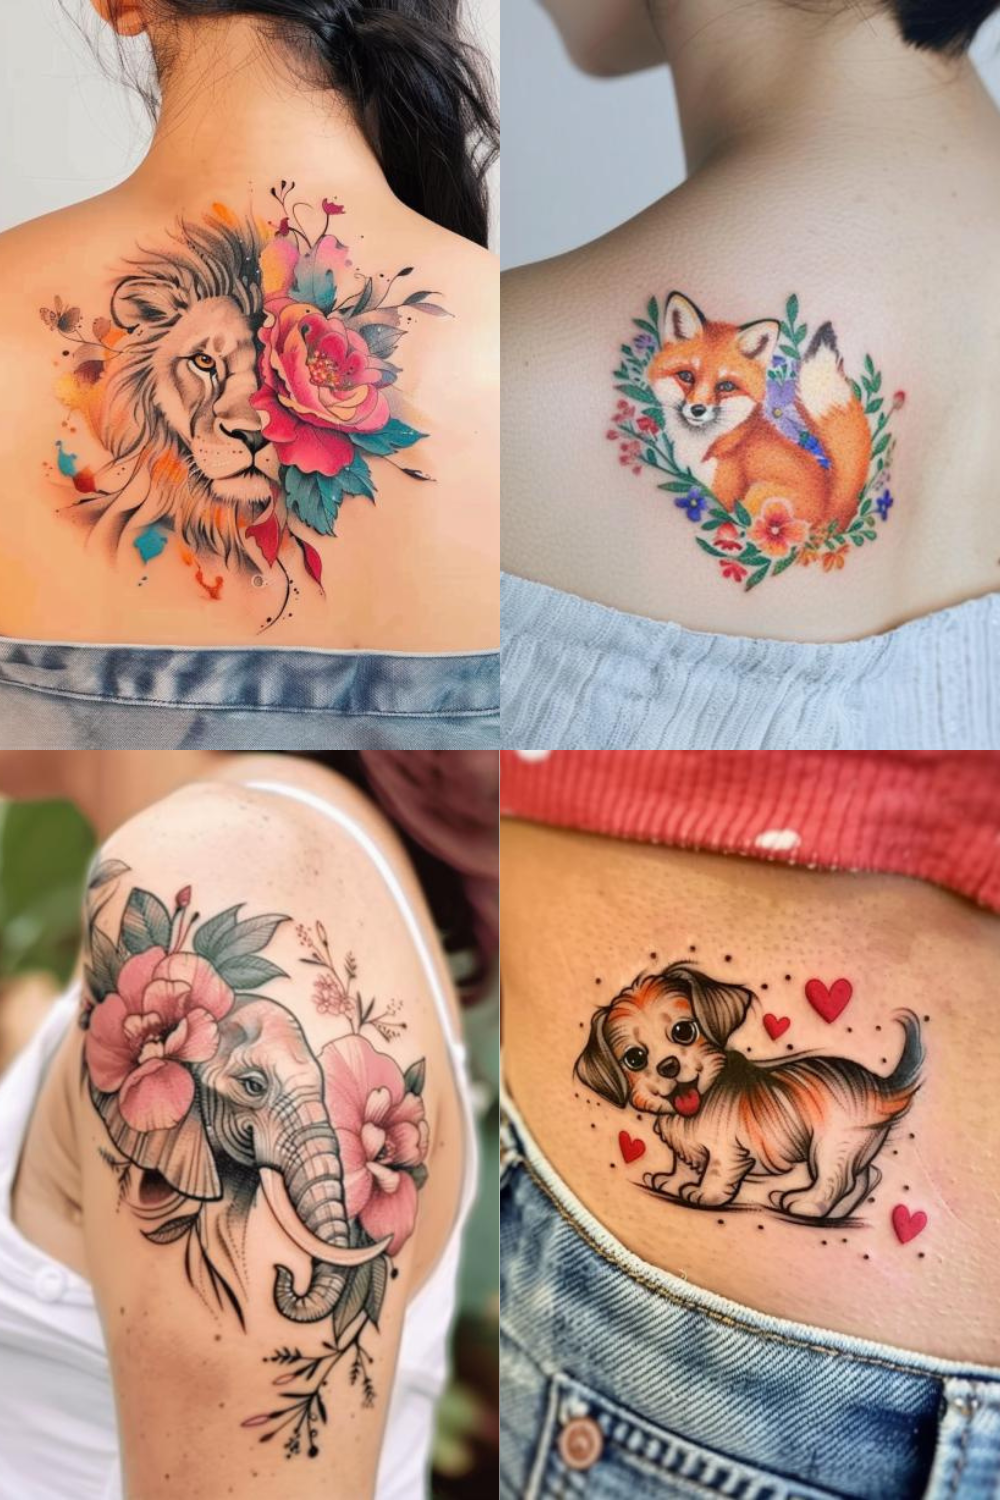 animal tattoo ideas